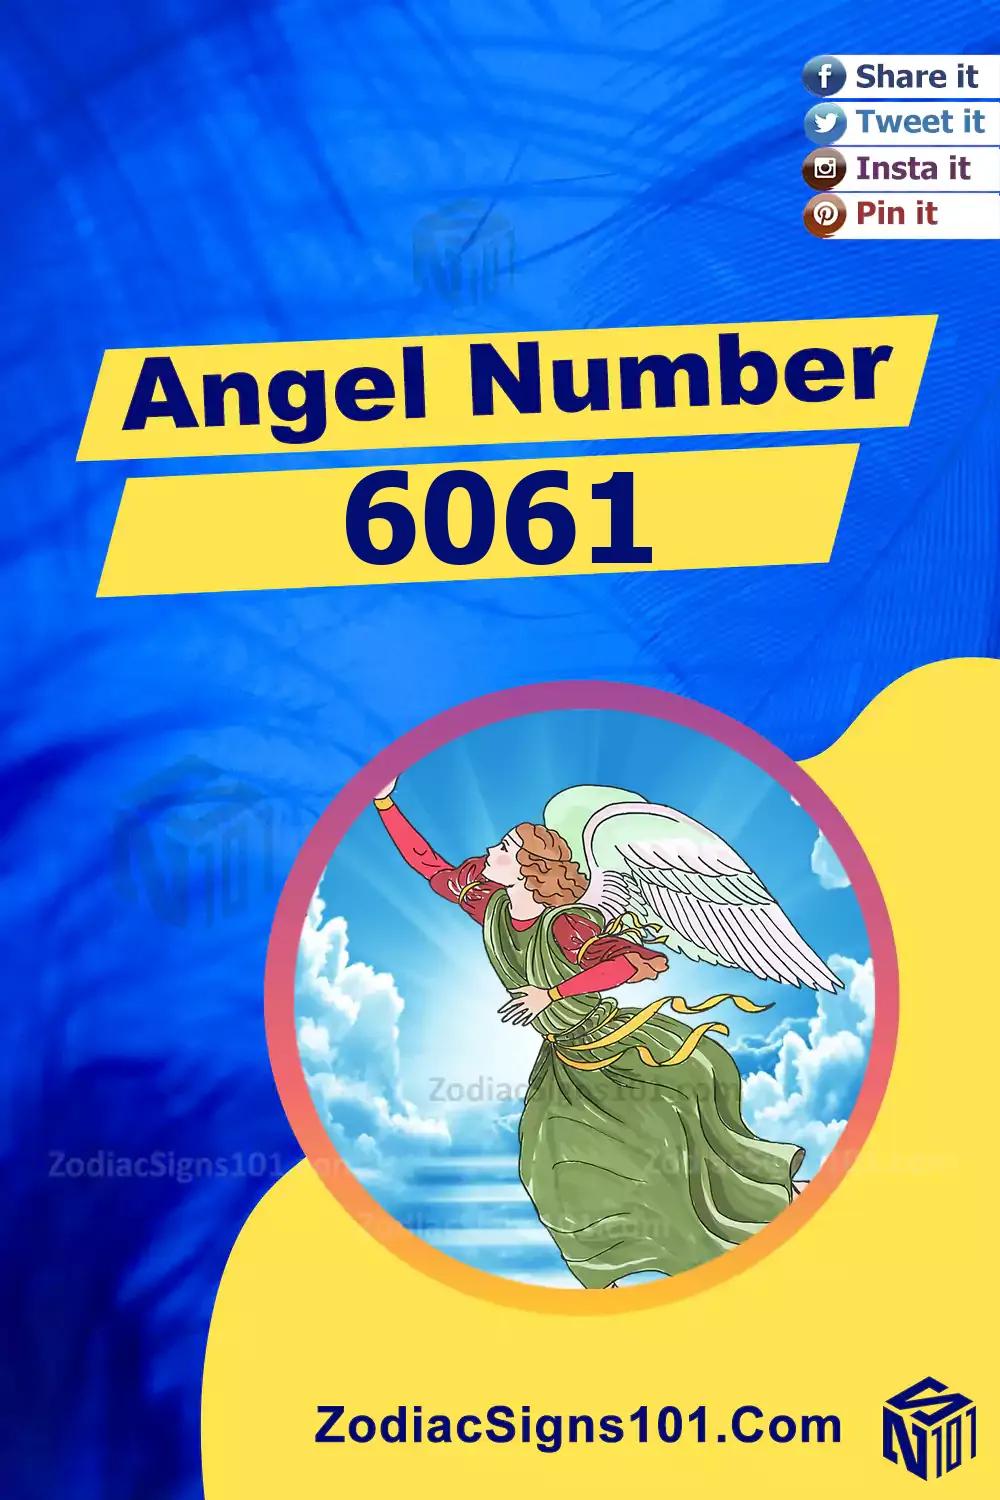 6061-Angel-Number-Meaning.jpg